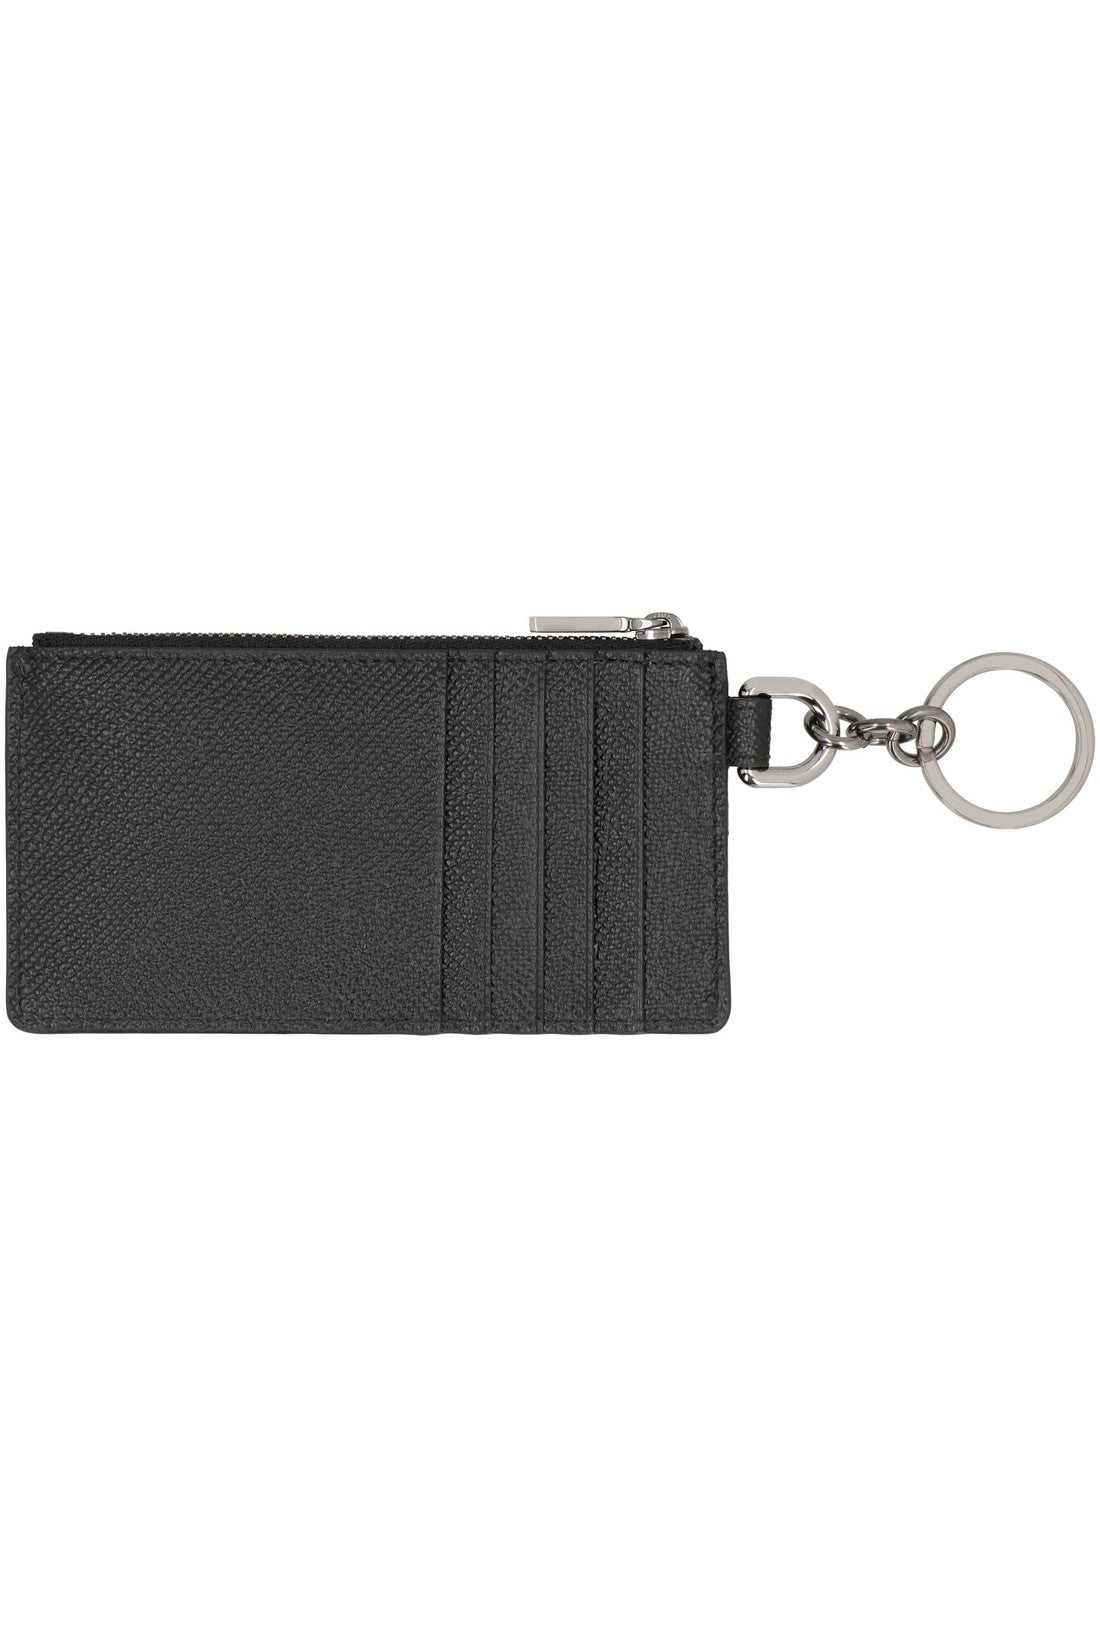 Dolce & Gabbana-OUTLET-SALE-Leather card holder-ARCHIVIST